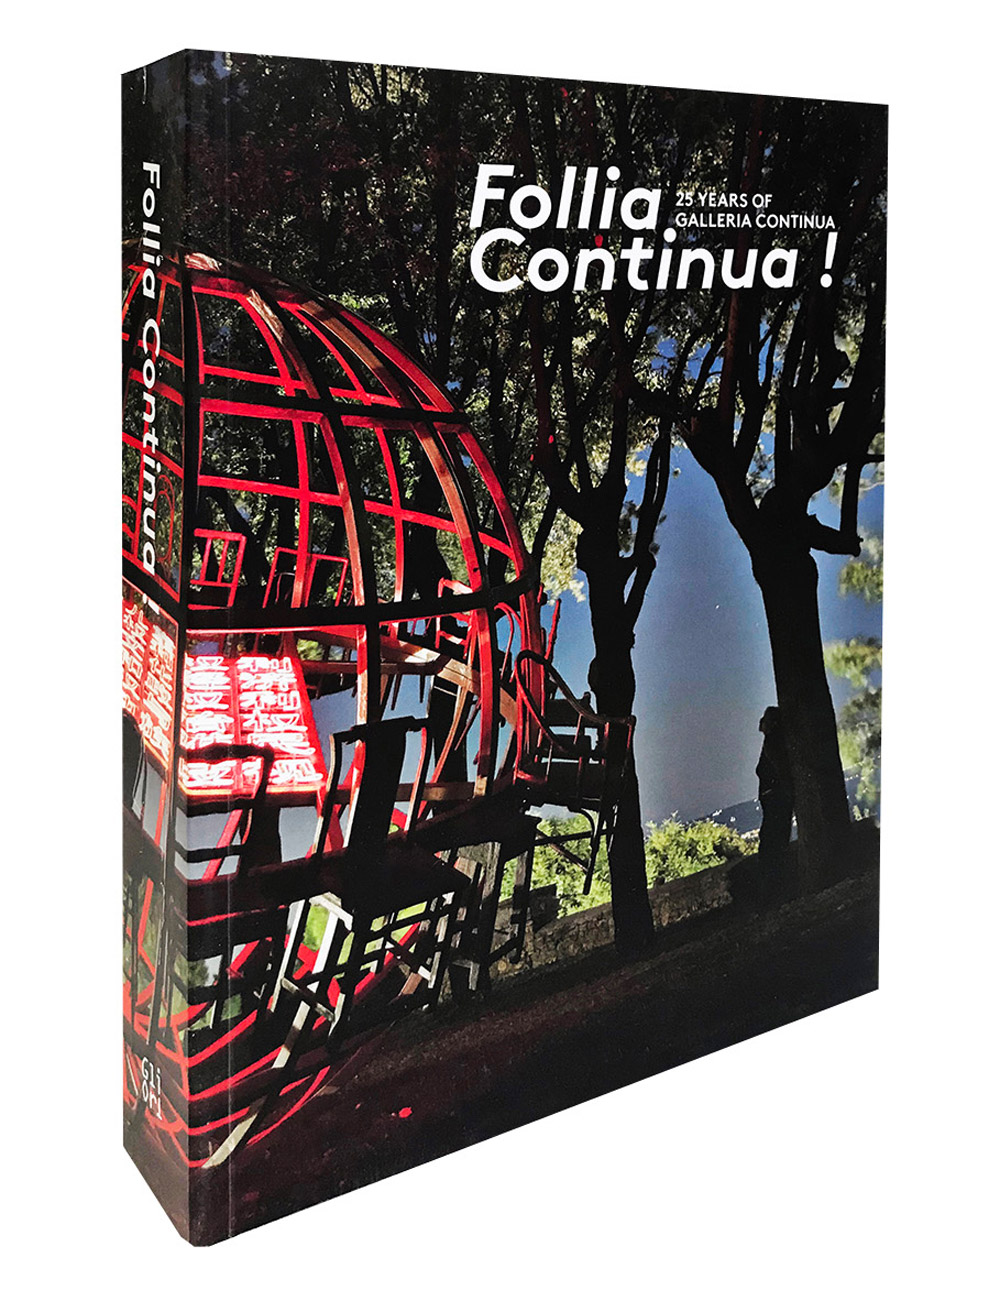 Galleria Continua - FOLLIA CONTINUA! 25 Years of Galleria Continua, 2015